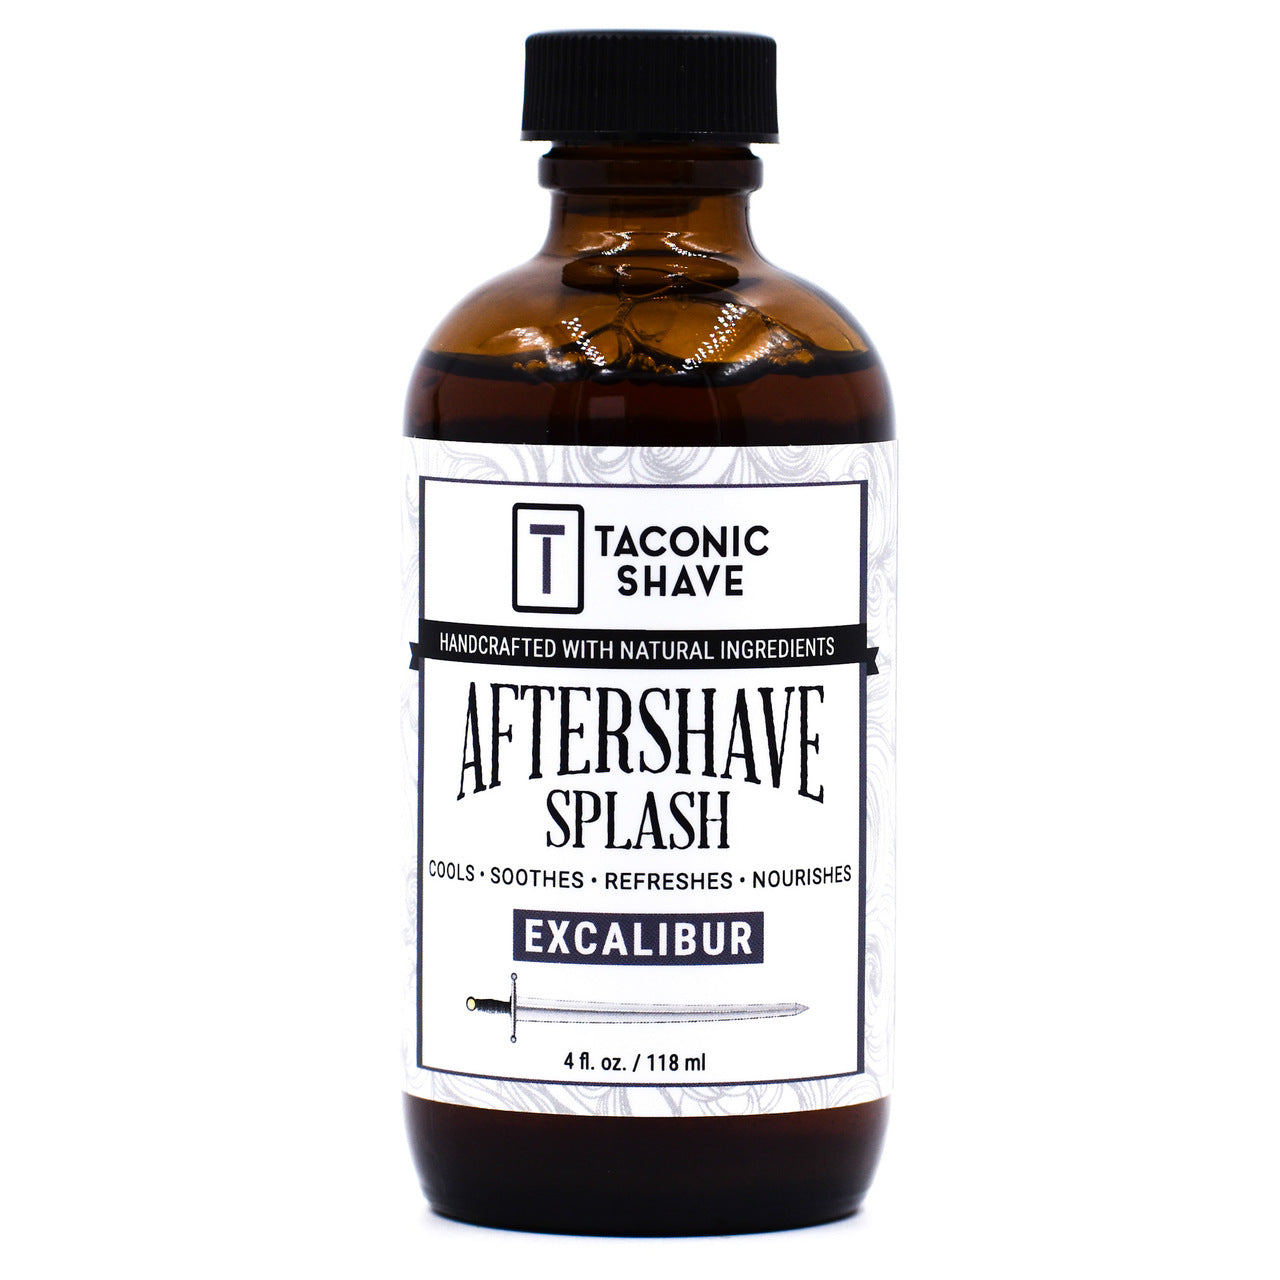 Taconic Shave Botanical Aftershave Splash - Excalibur - 4 Onzas